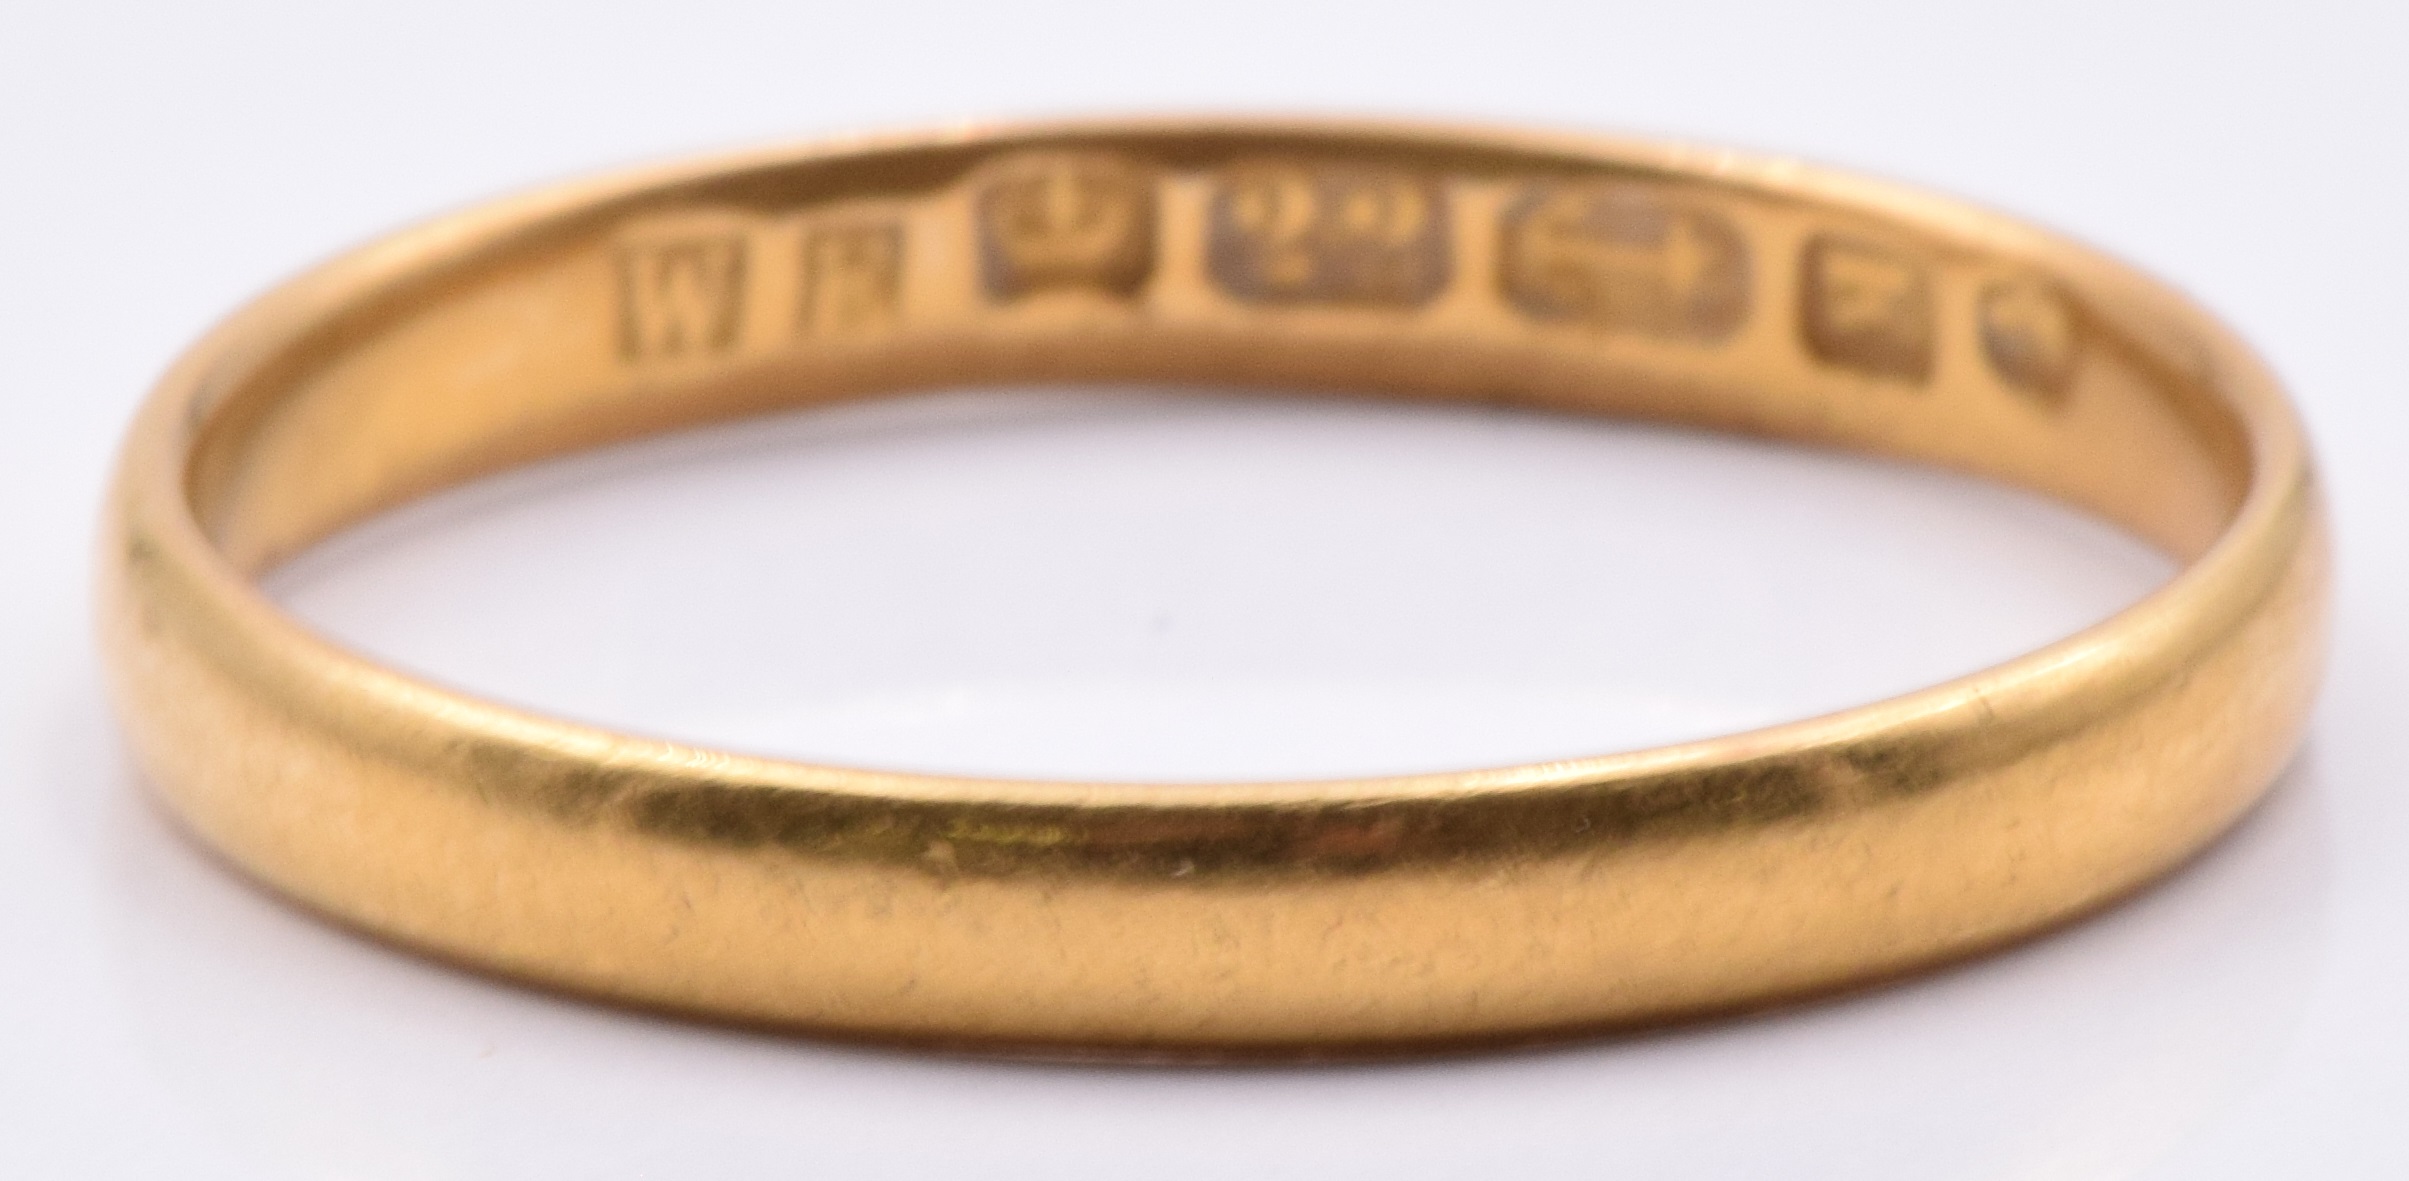 Victorian 22ct gold wedding band/ ring, Birmingham 1859, 1.9g, size L